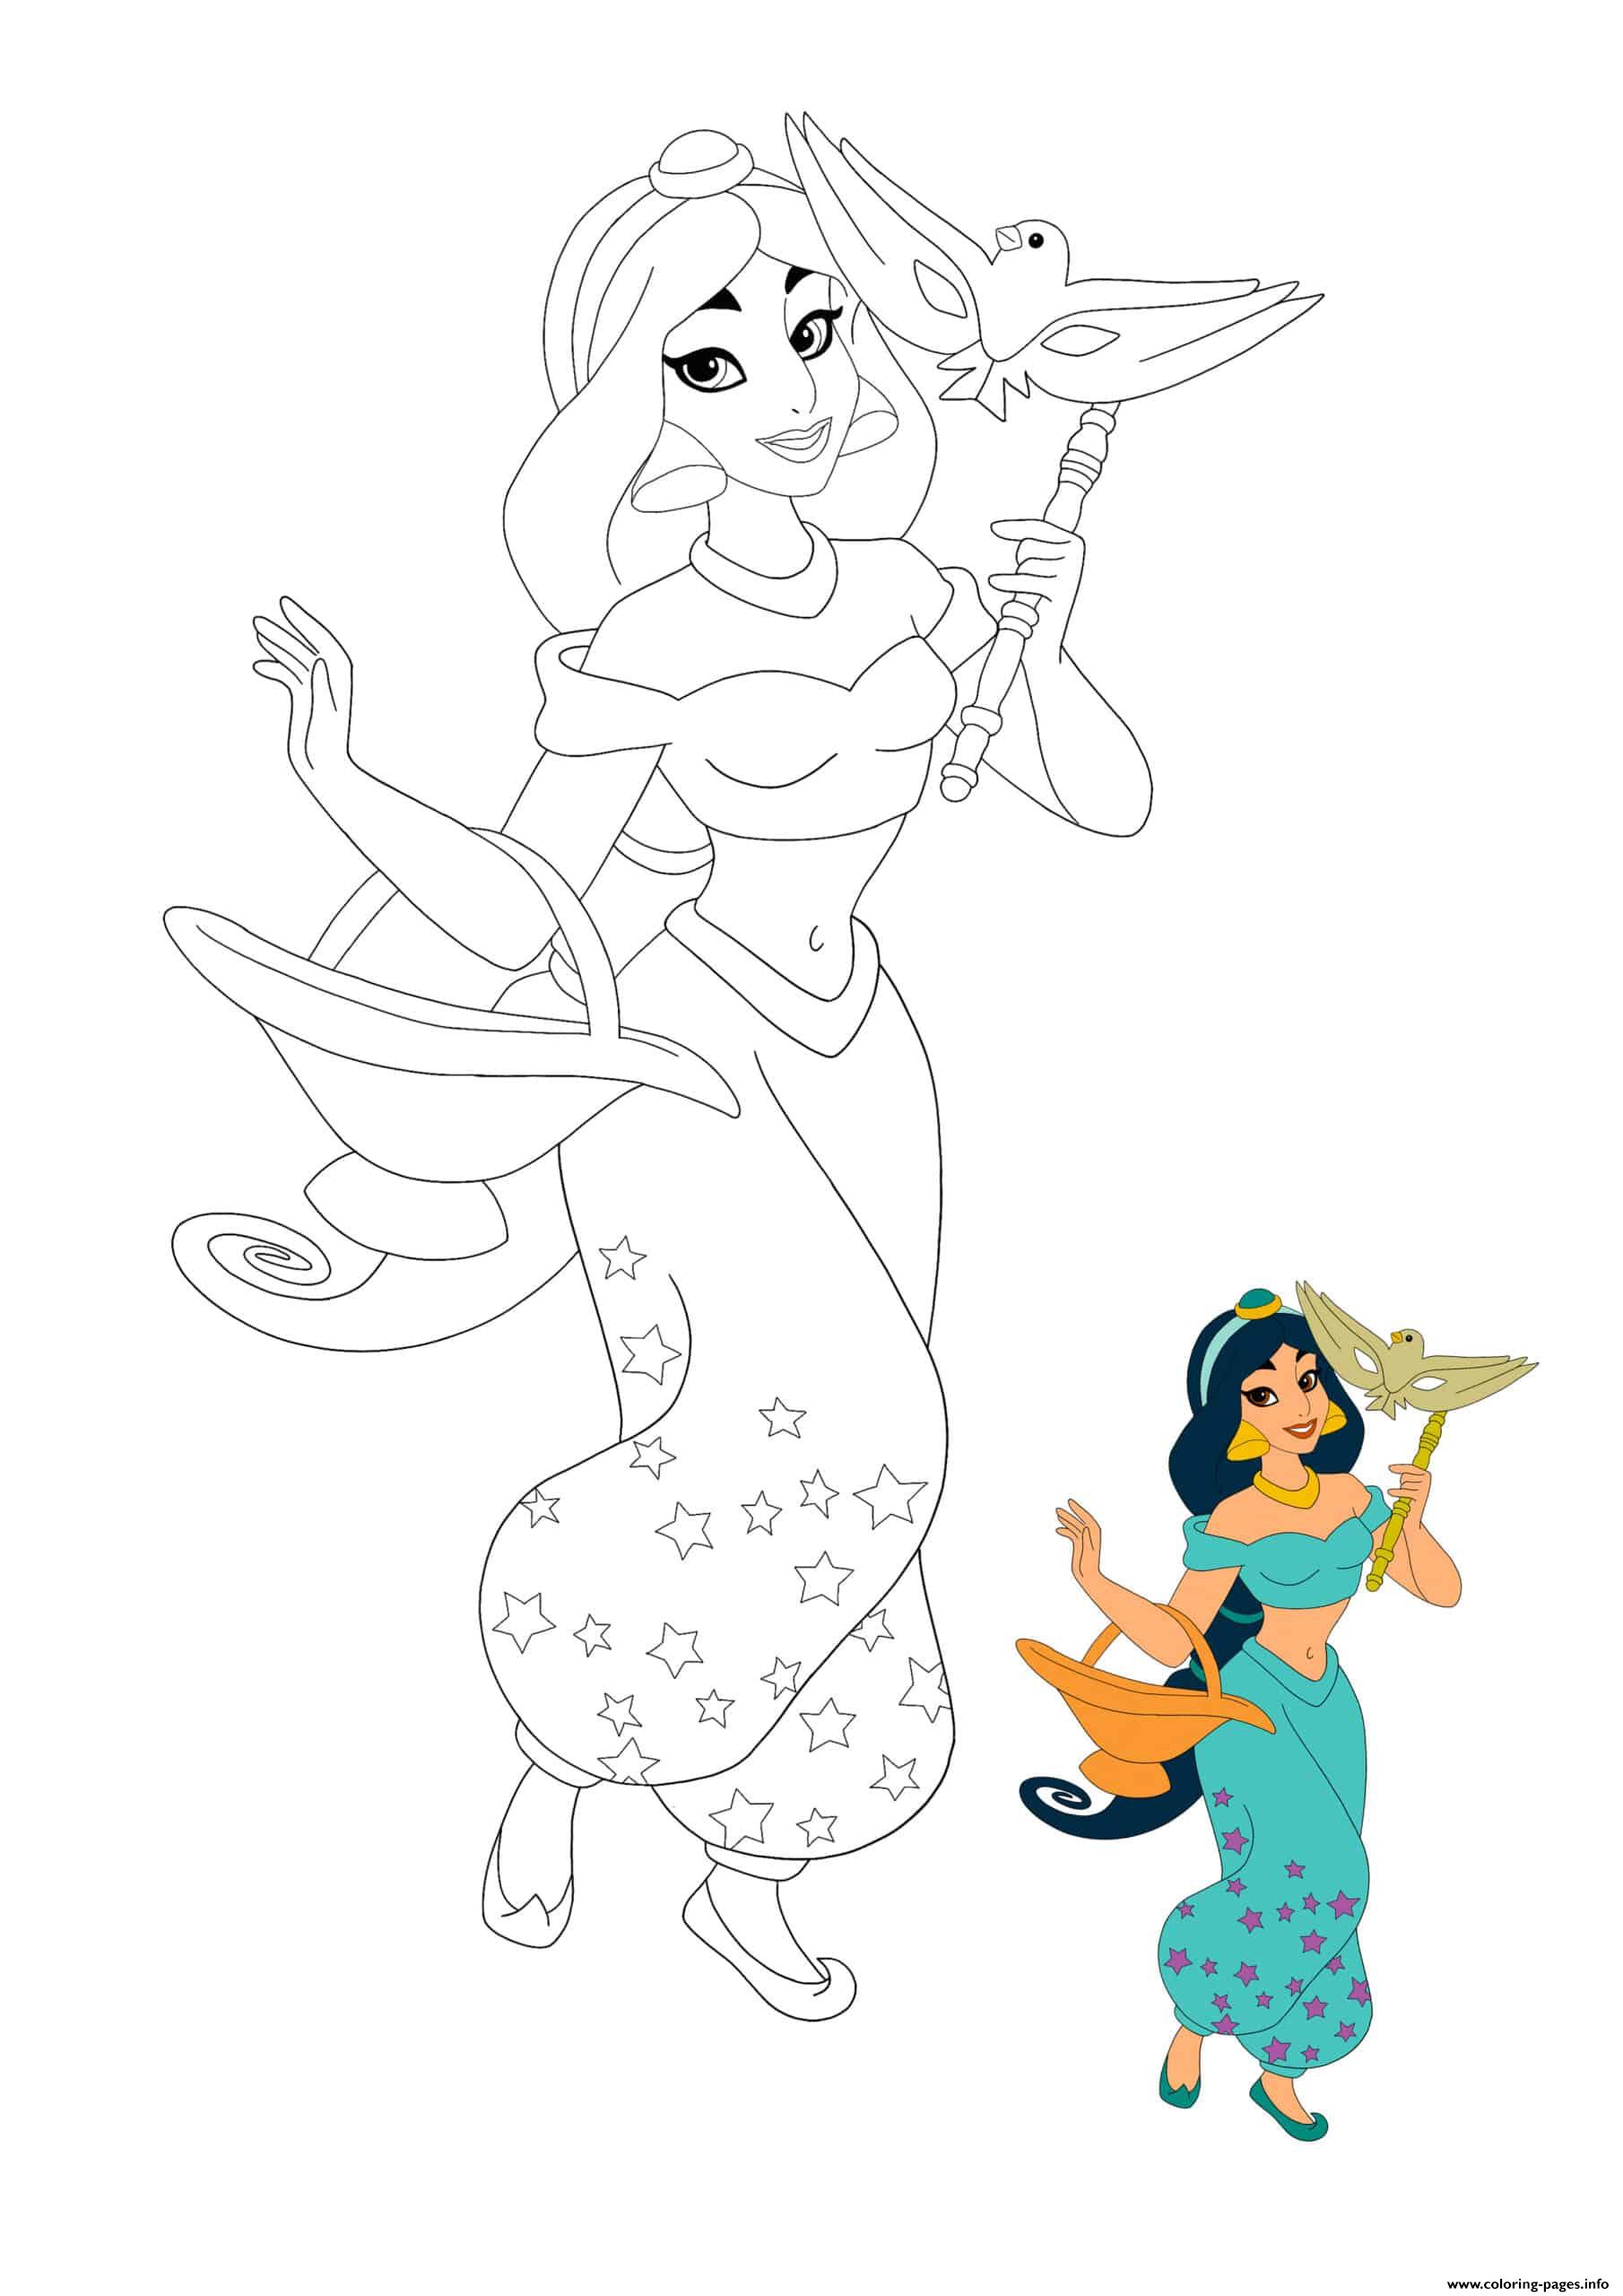 Cute Princess Jasmine coloring